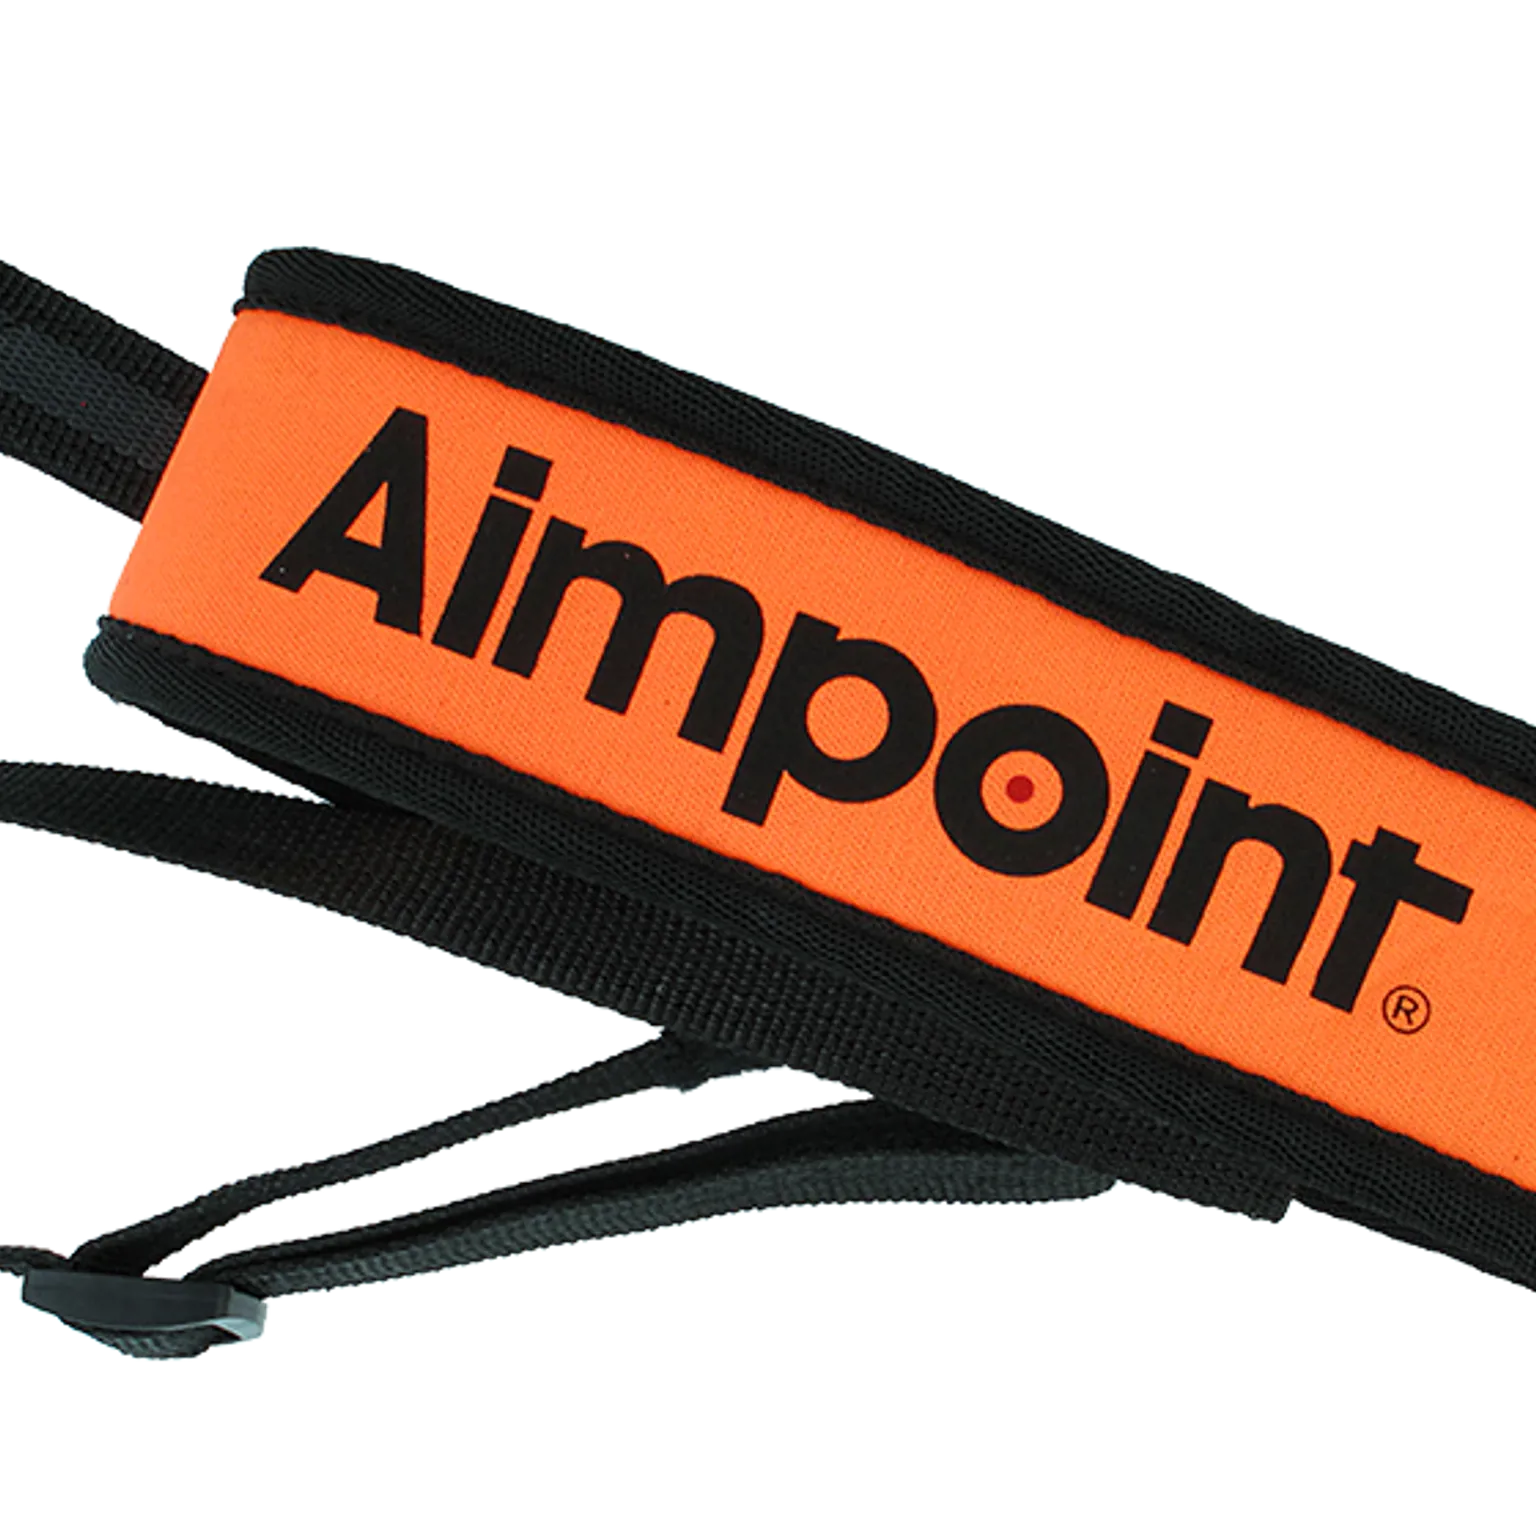 Aimpoint® Rifle sling Orange - Adjustable length  - 2